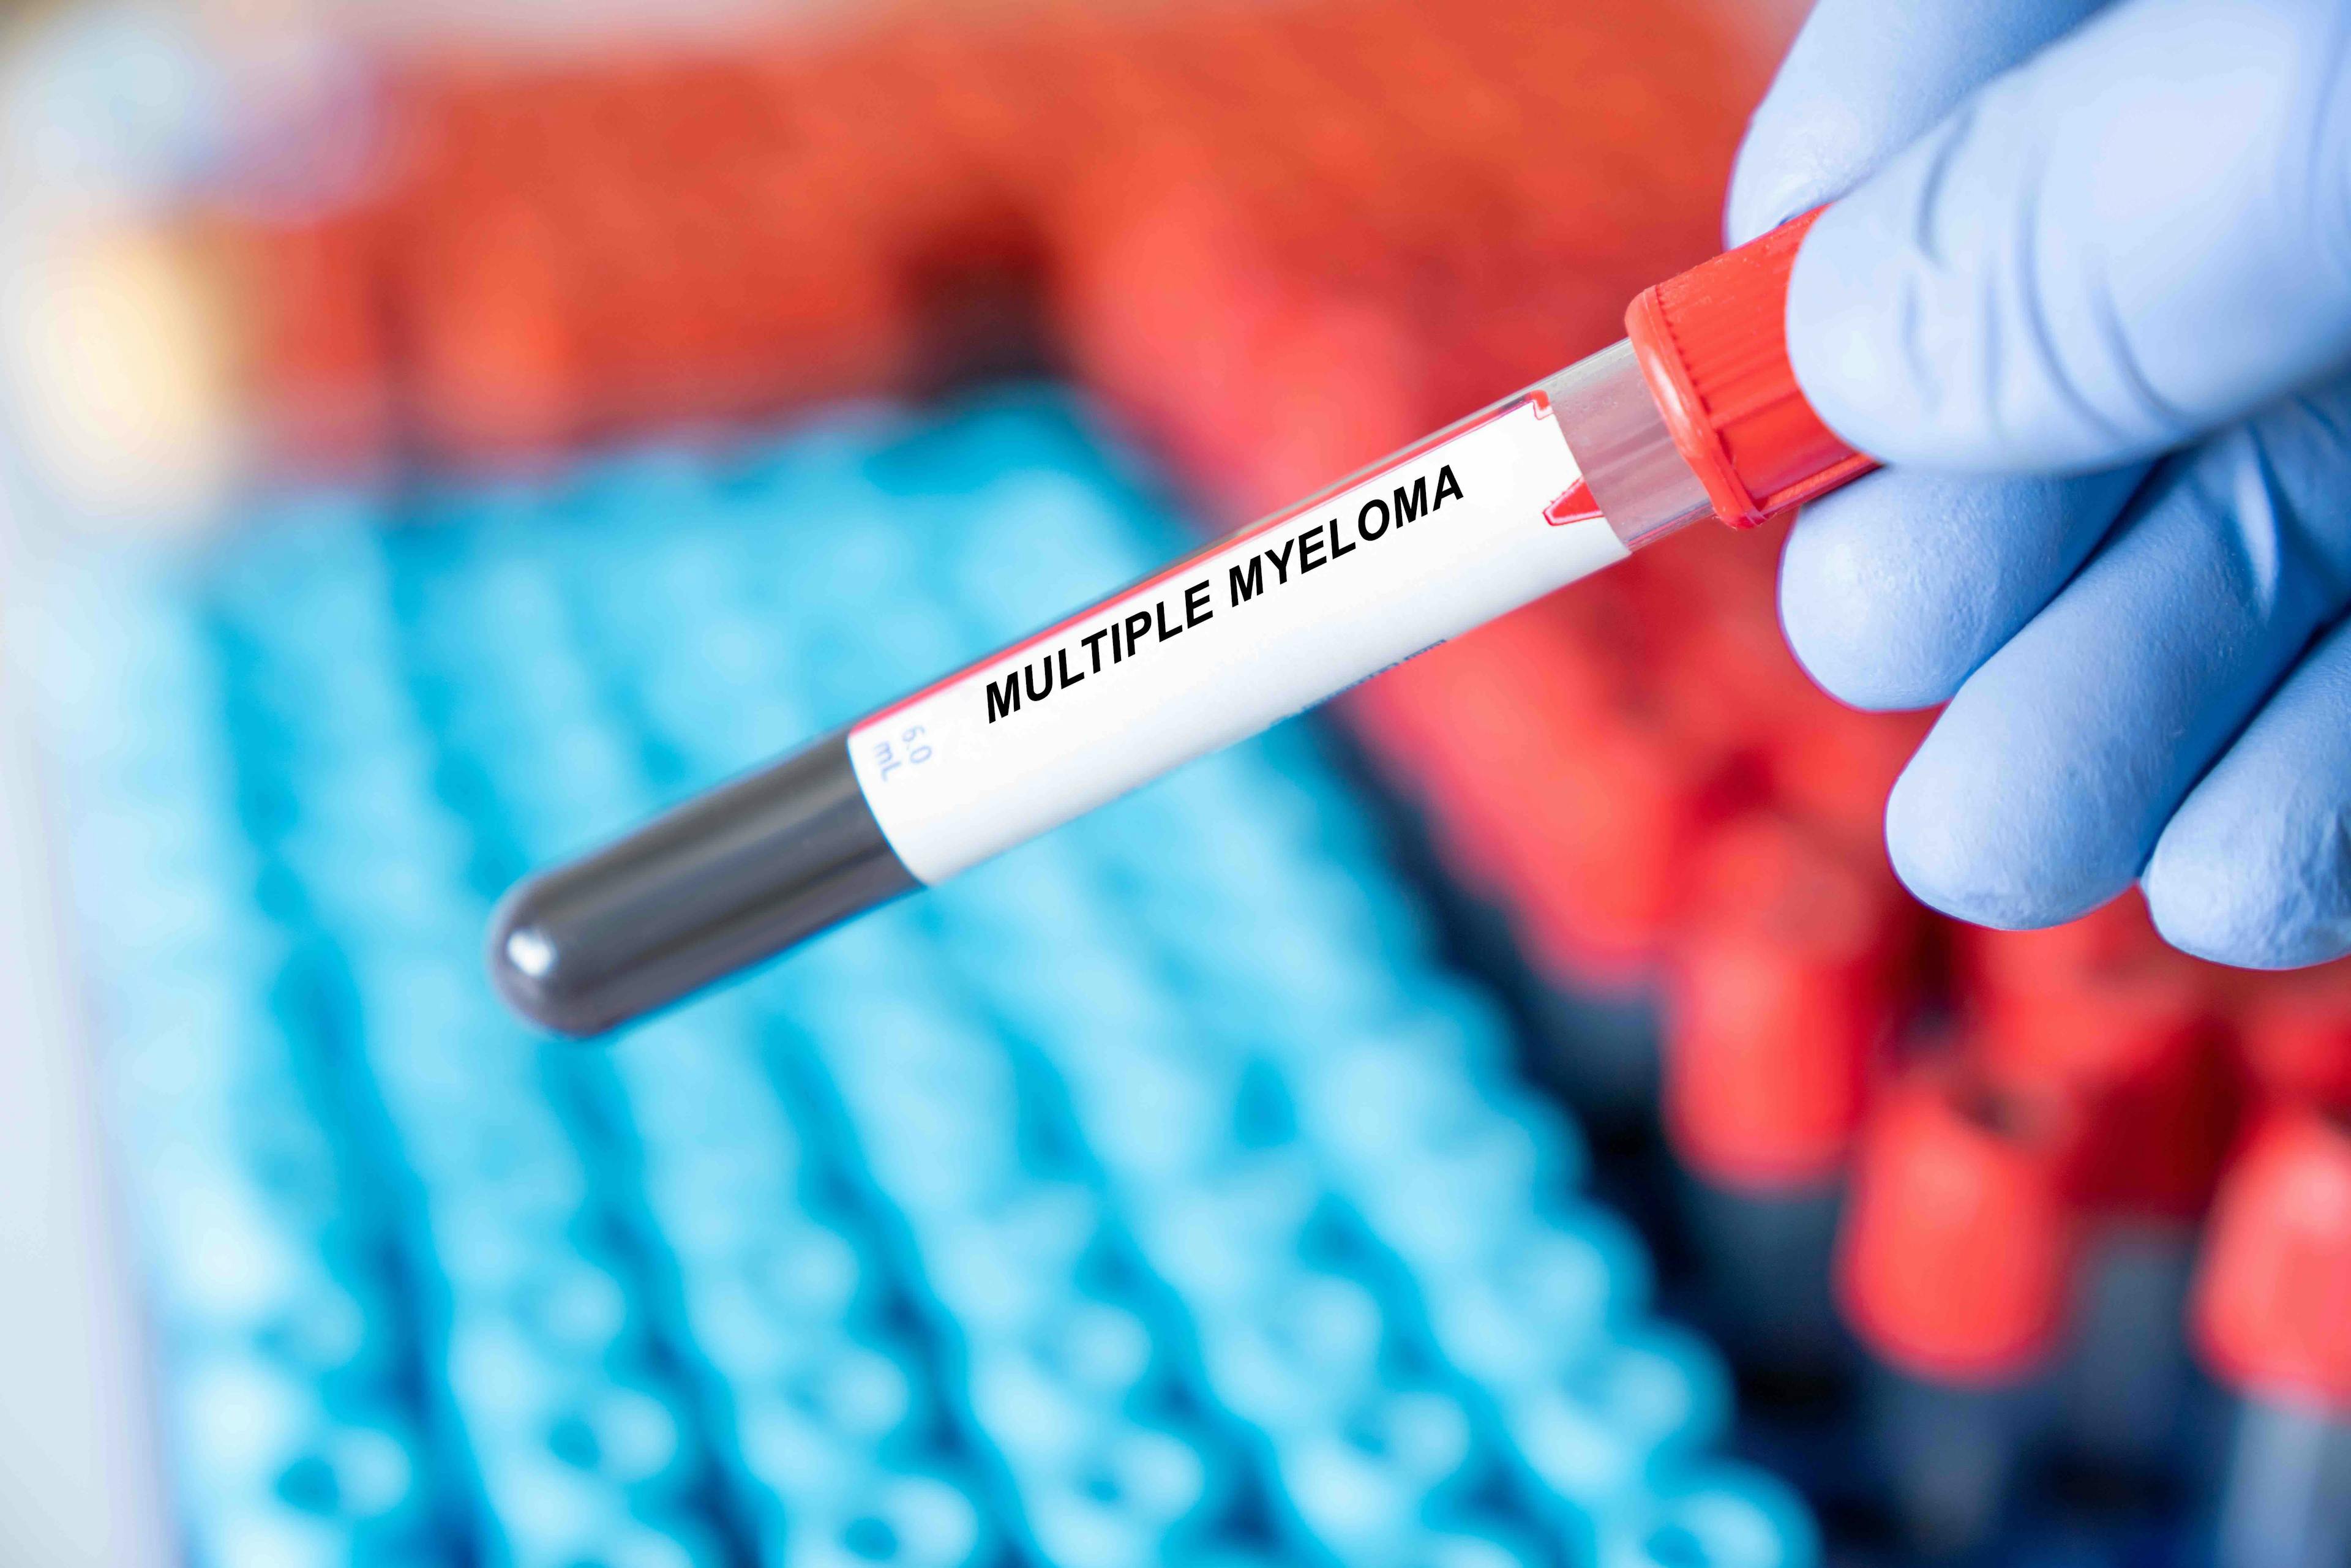 Multiple myeloma blood testing Image credit: luchschenF - stock.adobe.com